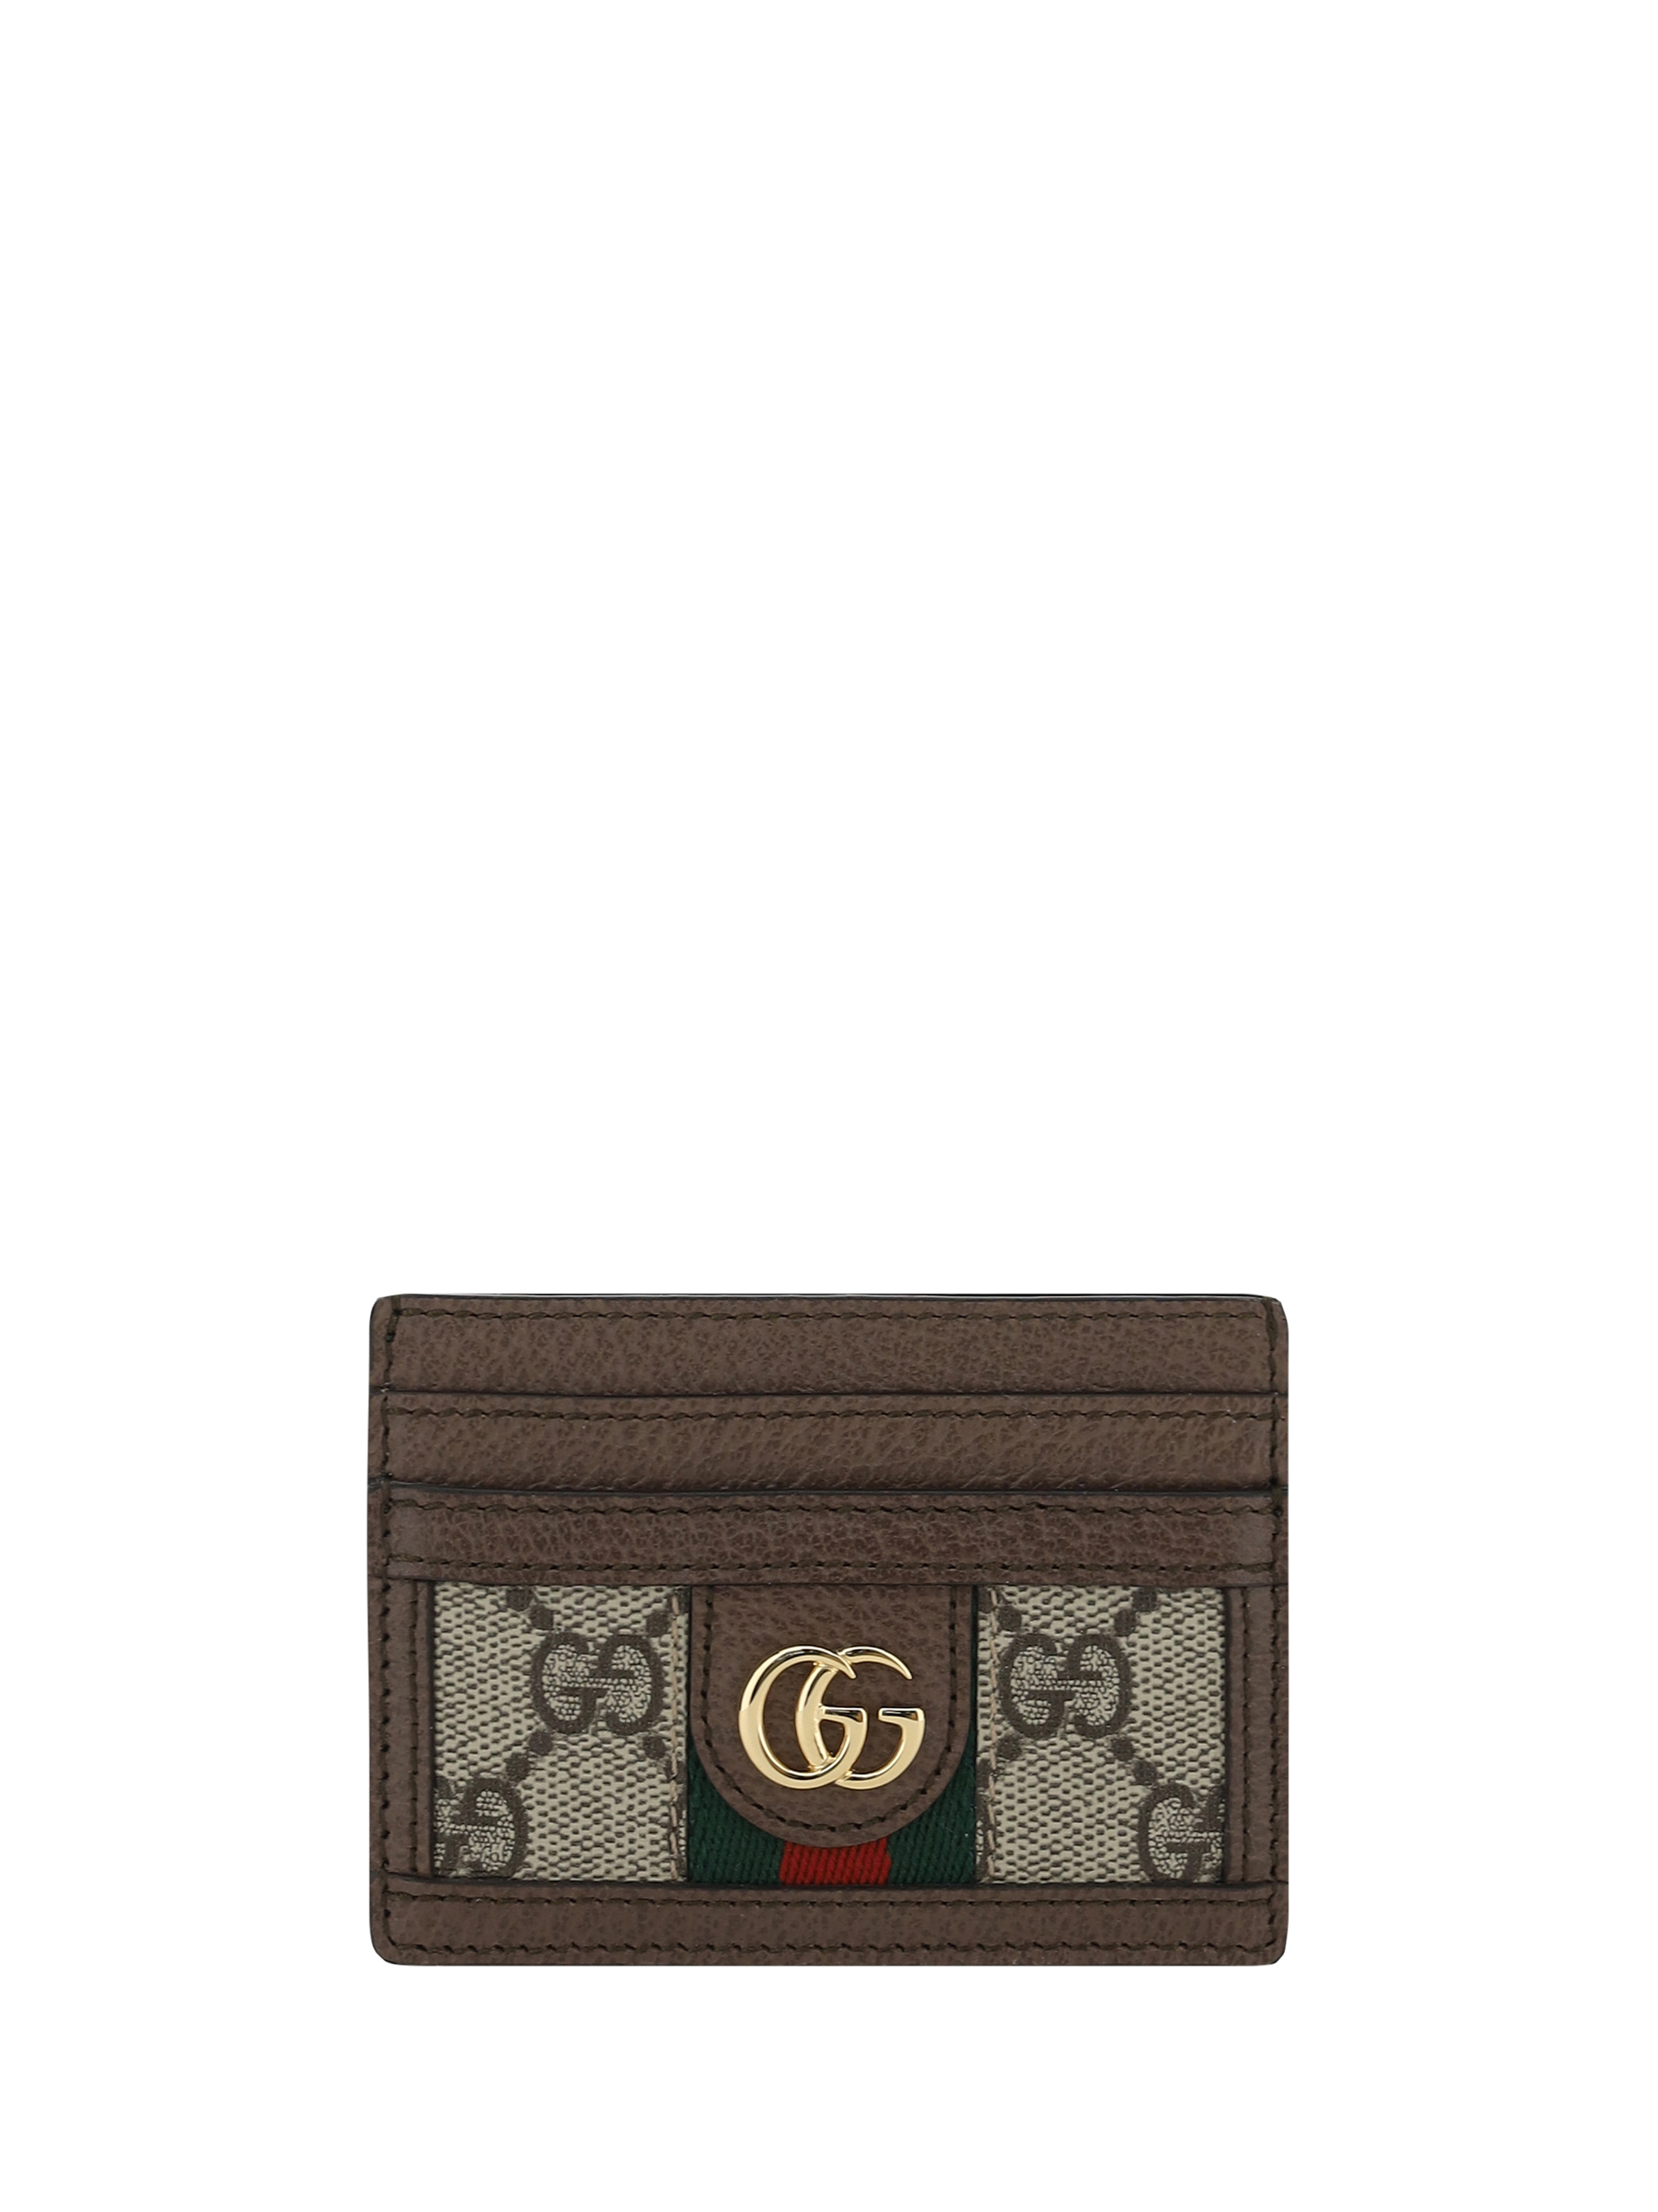 Gucci Card Case In Brown